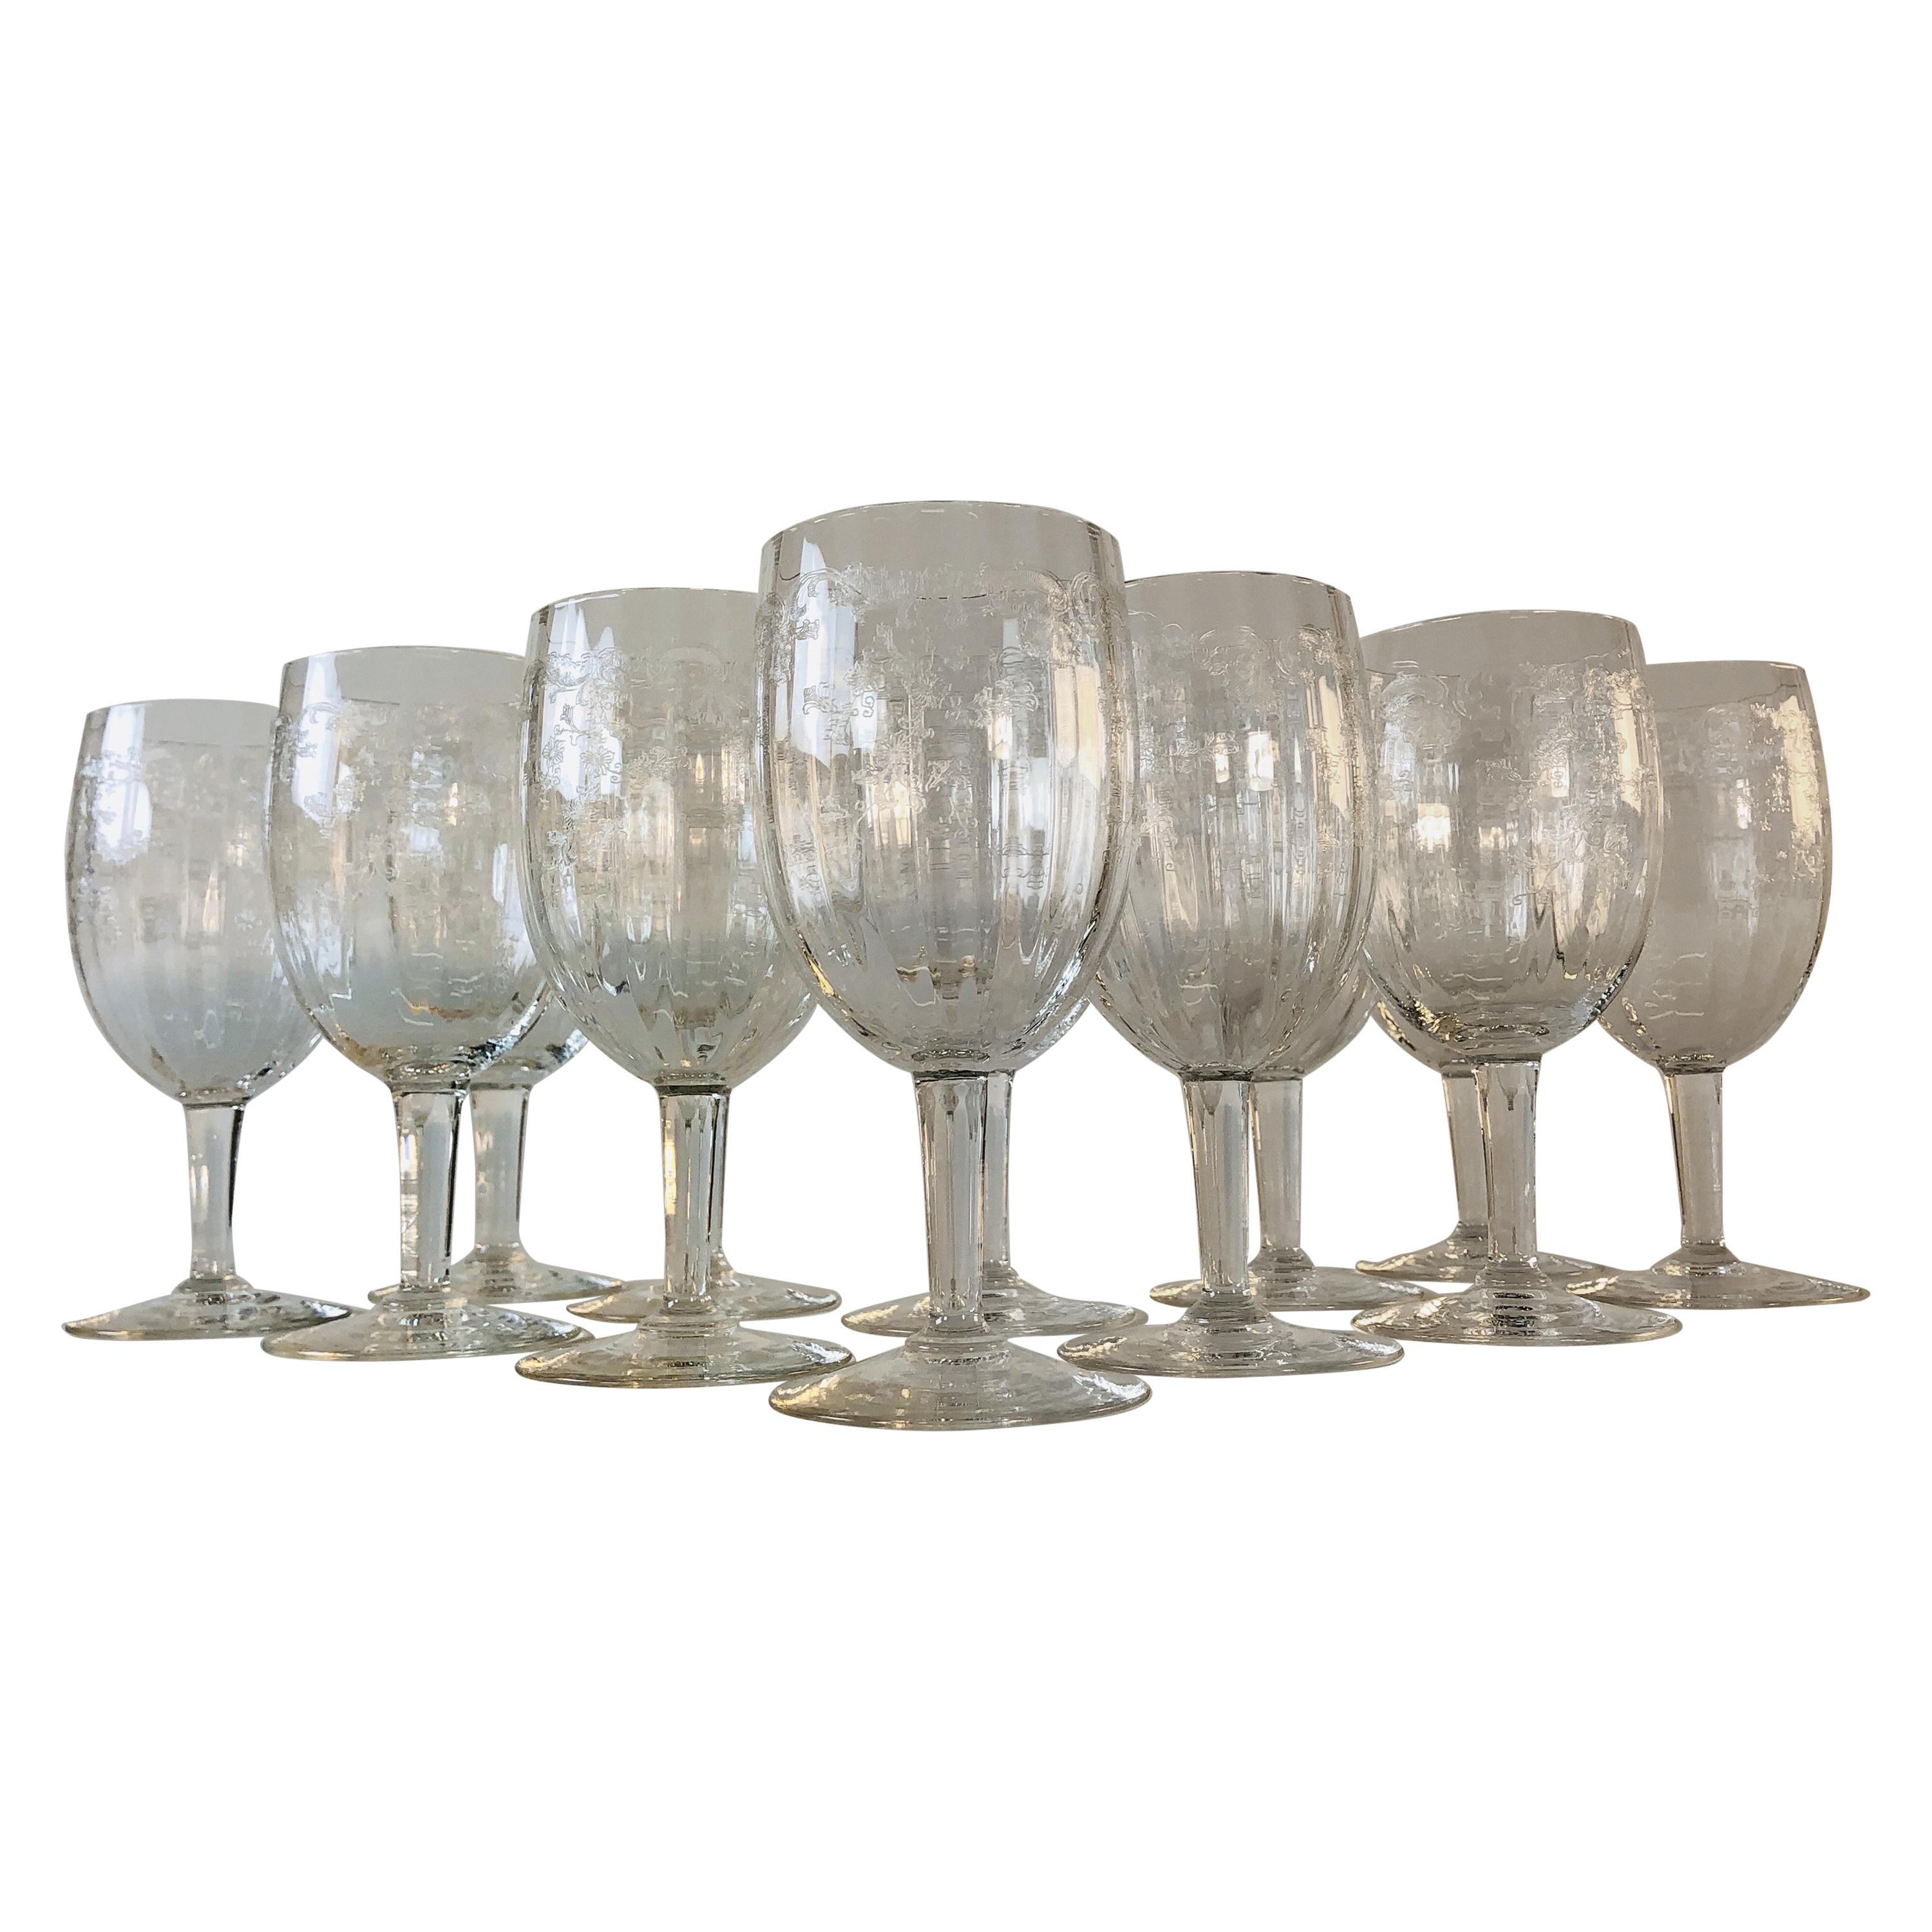 https://a.1stdibscdn.com/1950s-floral-etched-glass-wine-stems-set-of-12-for-sale/1121189/f_179501621581729027473/17950162_master.jpg